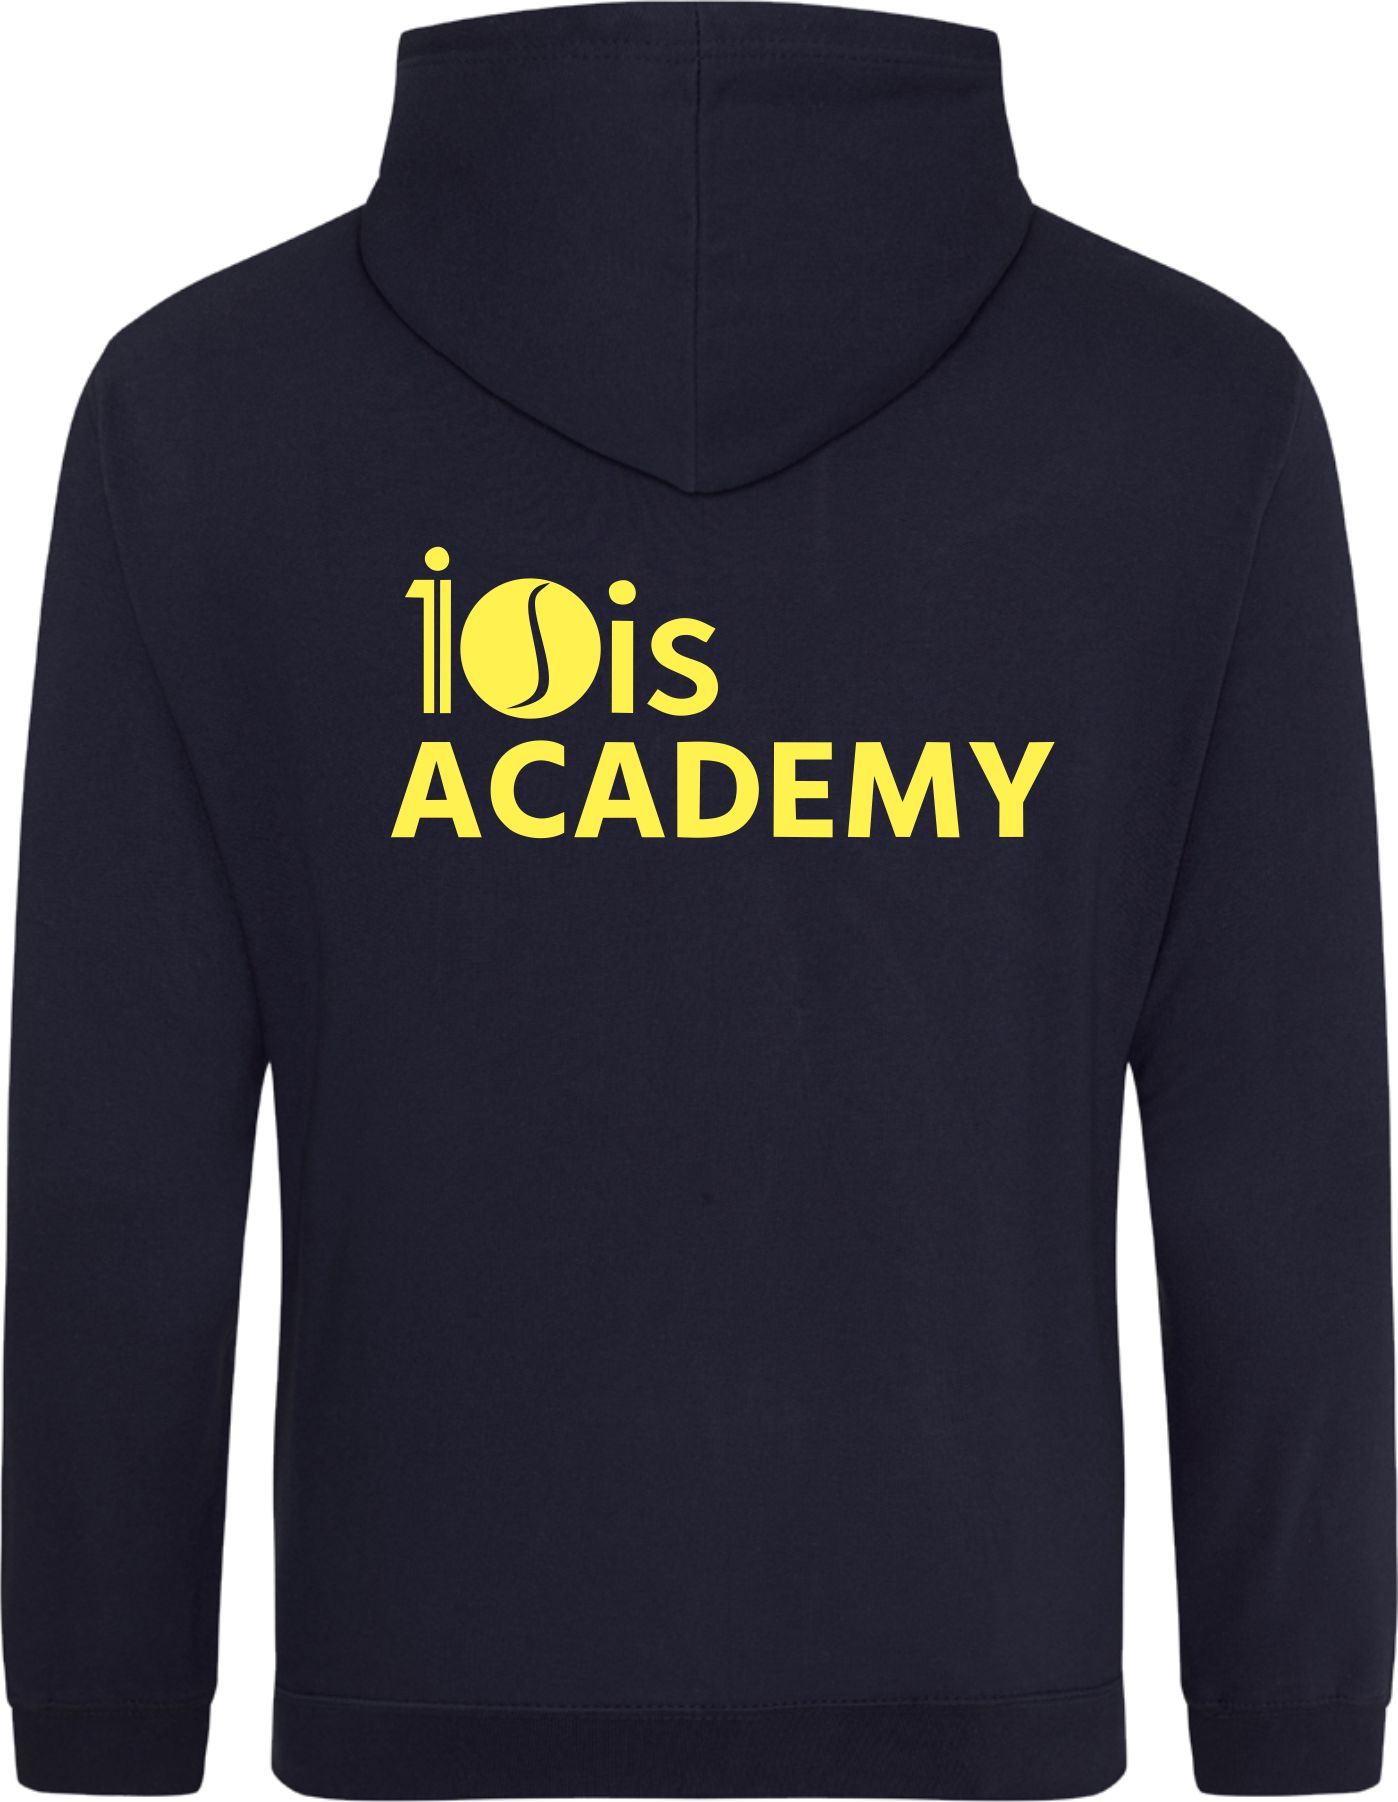 10is Academy Hoodie (unisex)